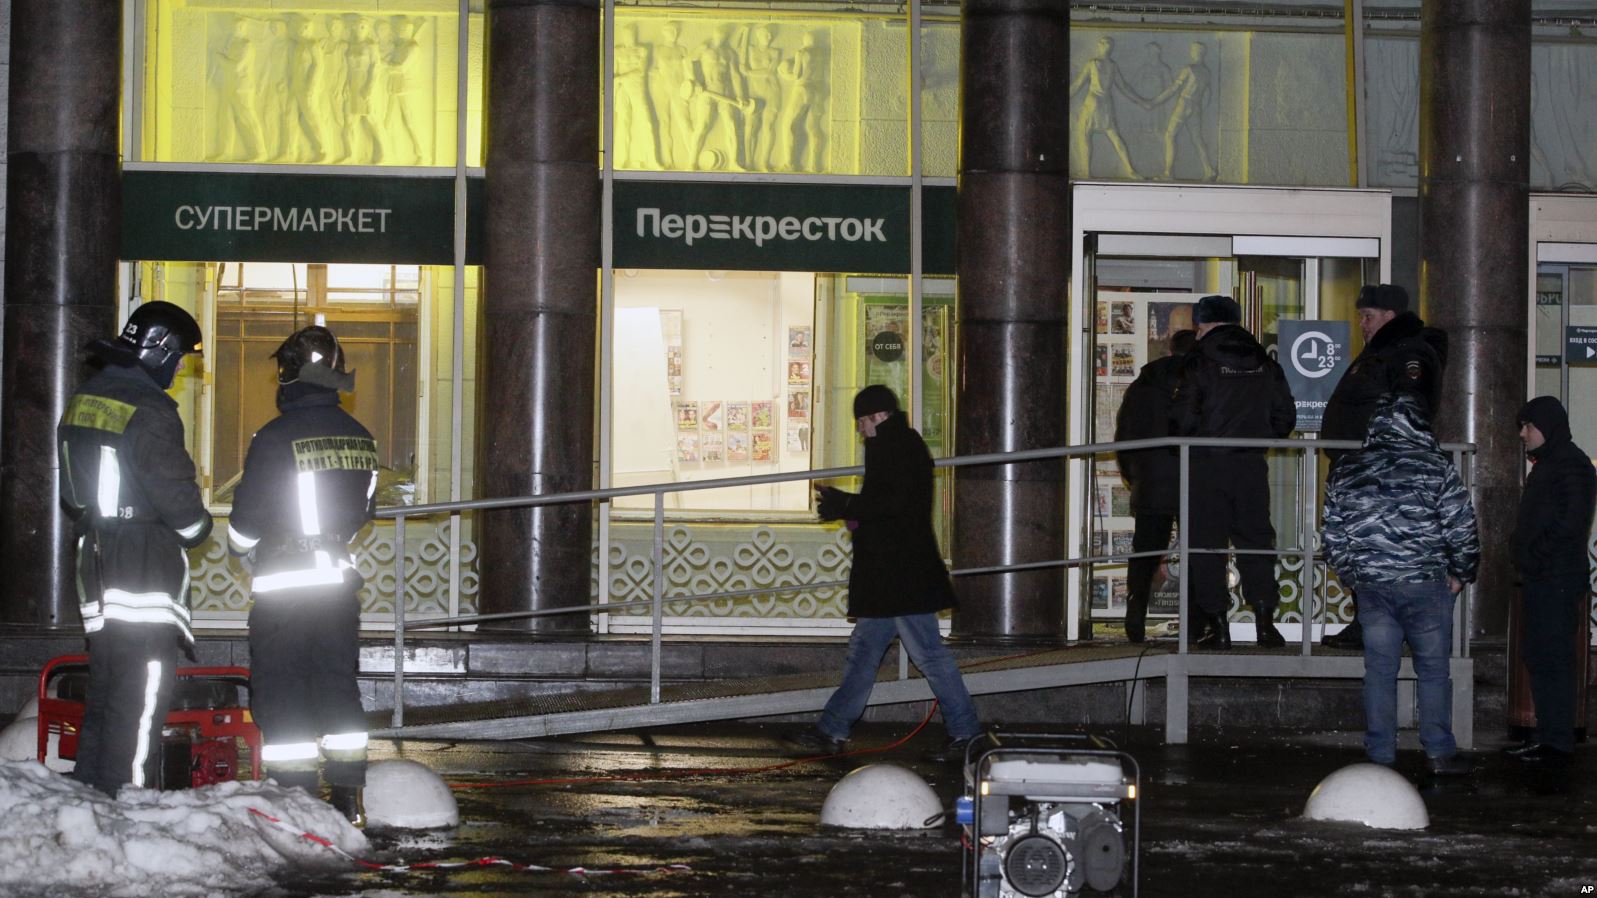 Polisi mengamankan lokasi ledakan di pintu masuk supermarket, setelah ledakan bom rakitan di St. Petersburg, Rusia, Rabu 27 Desember 2017 (Foto: Google)